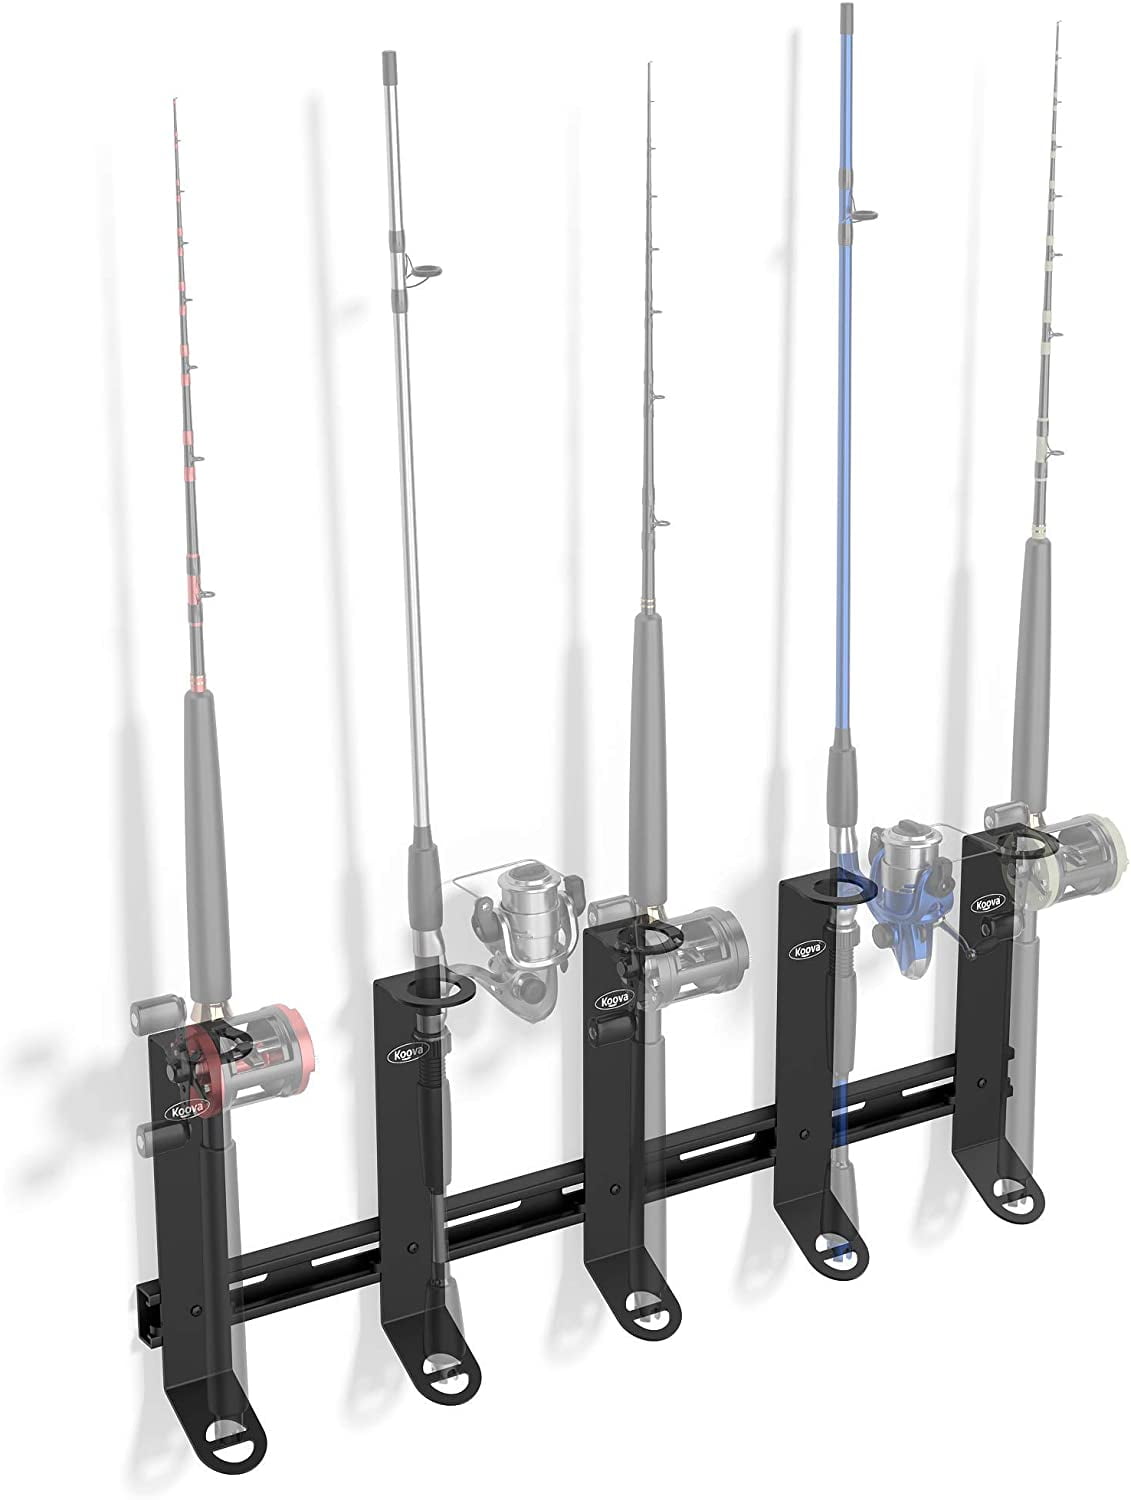 Koova Fishing Rod Holder - Mixed